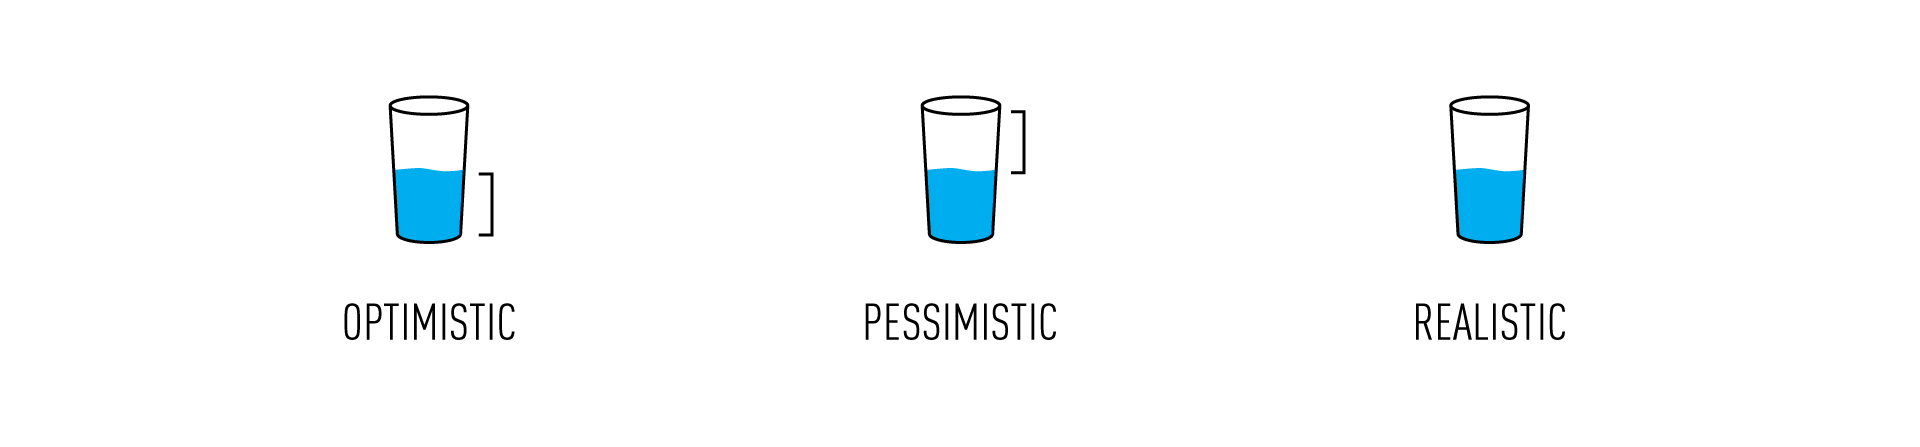 Should You Be Optimistic, Pessimistic, Or Realistic?